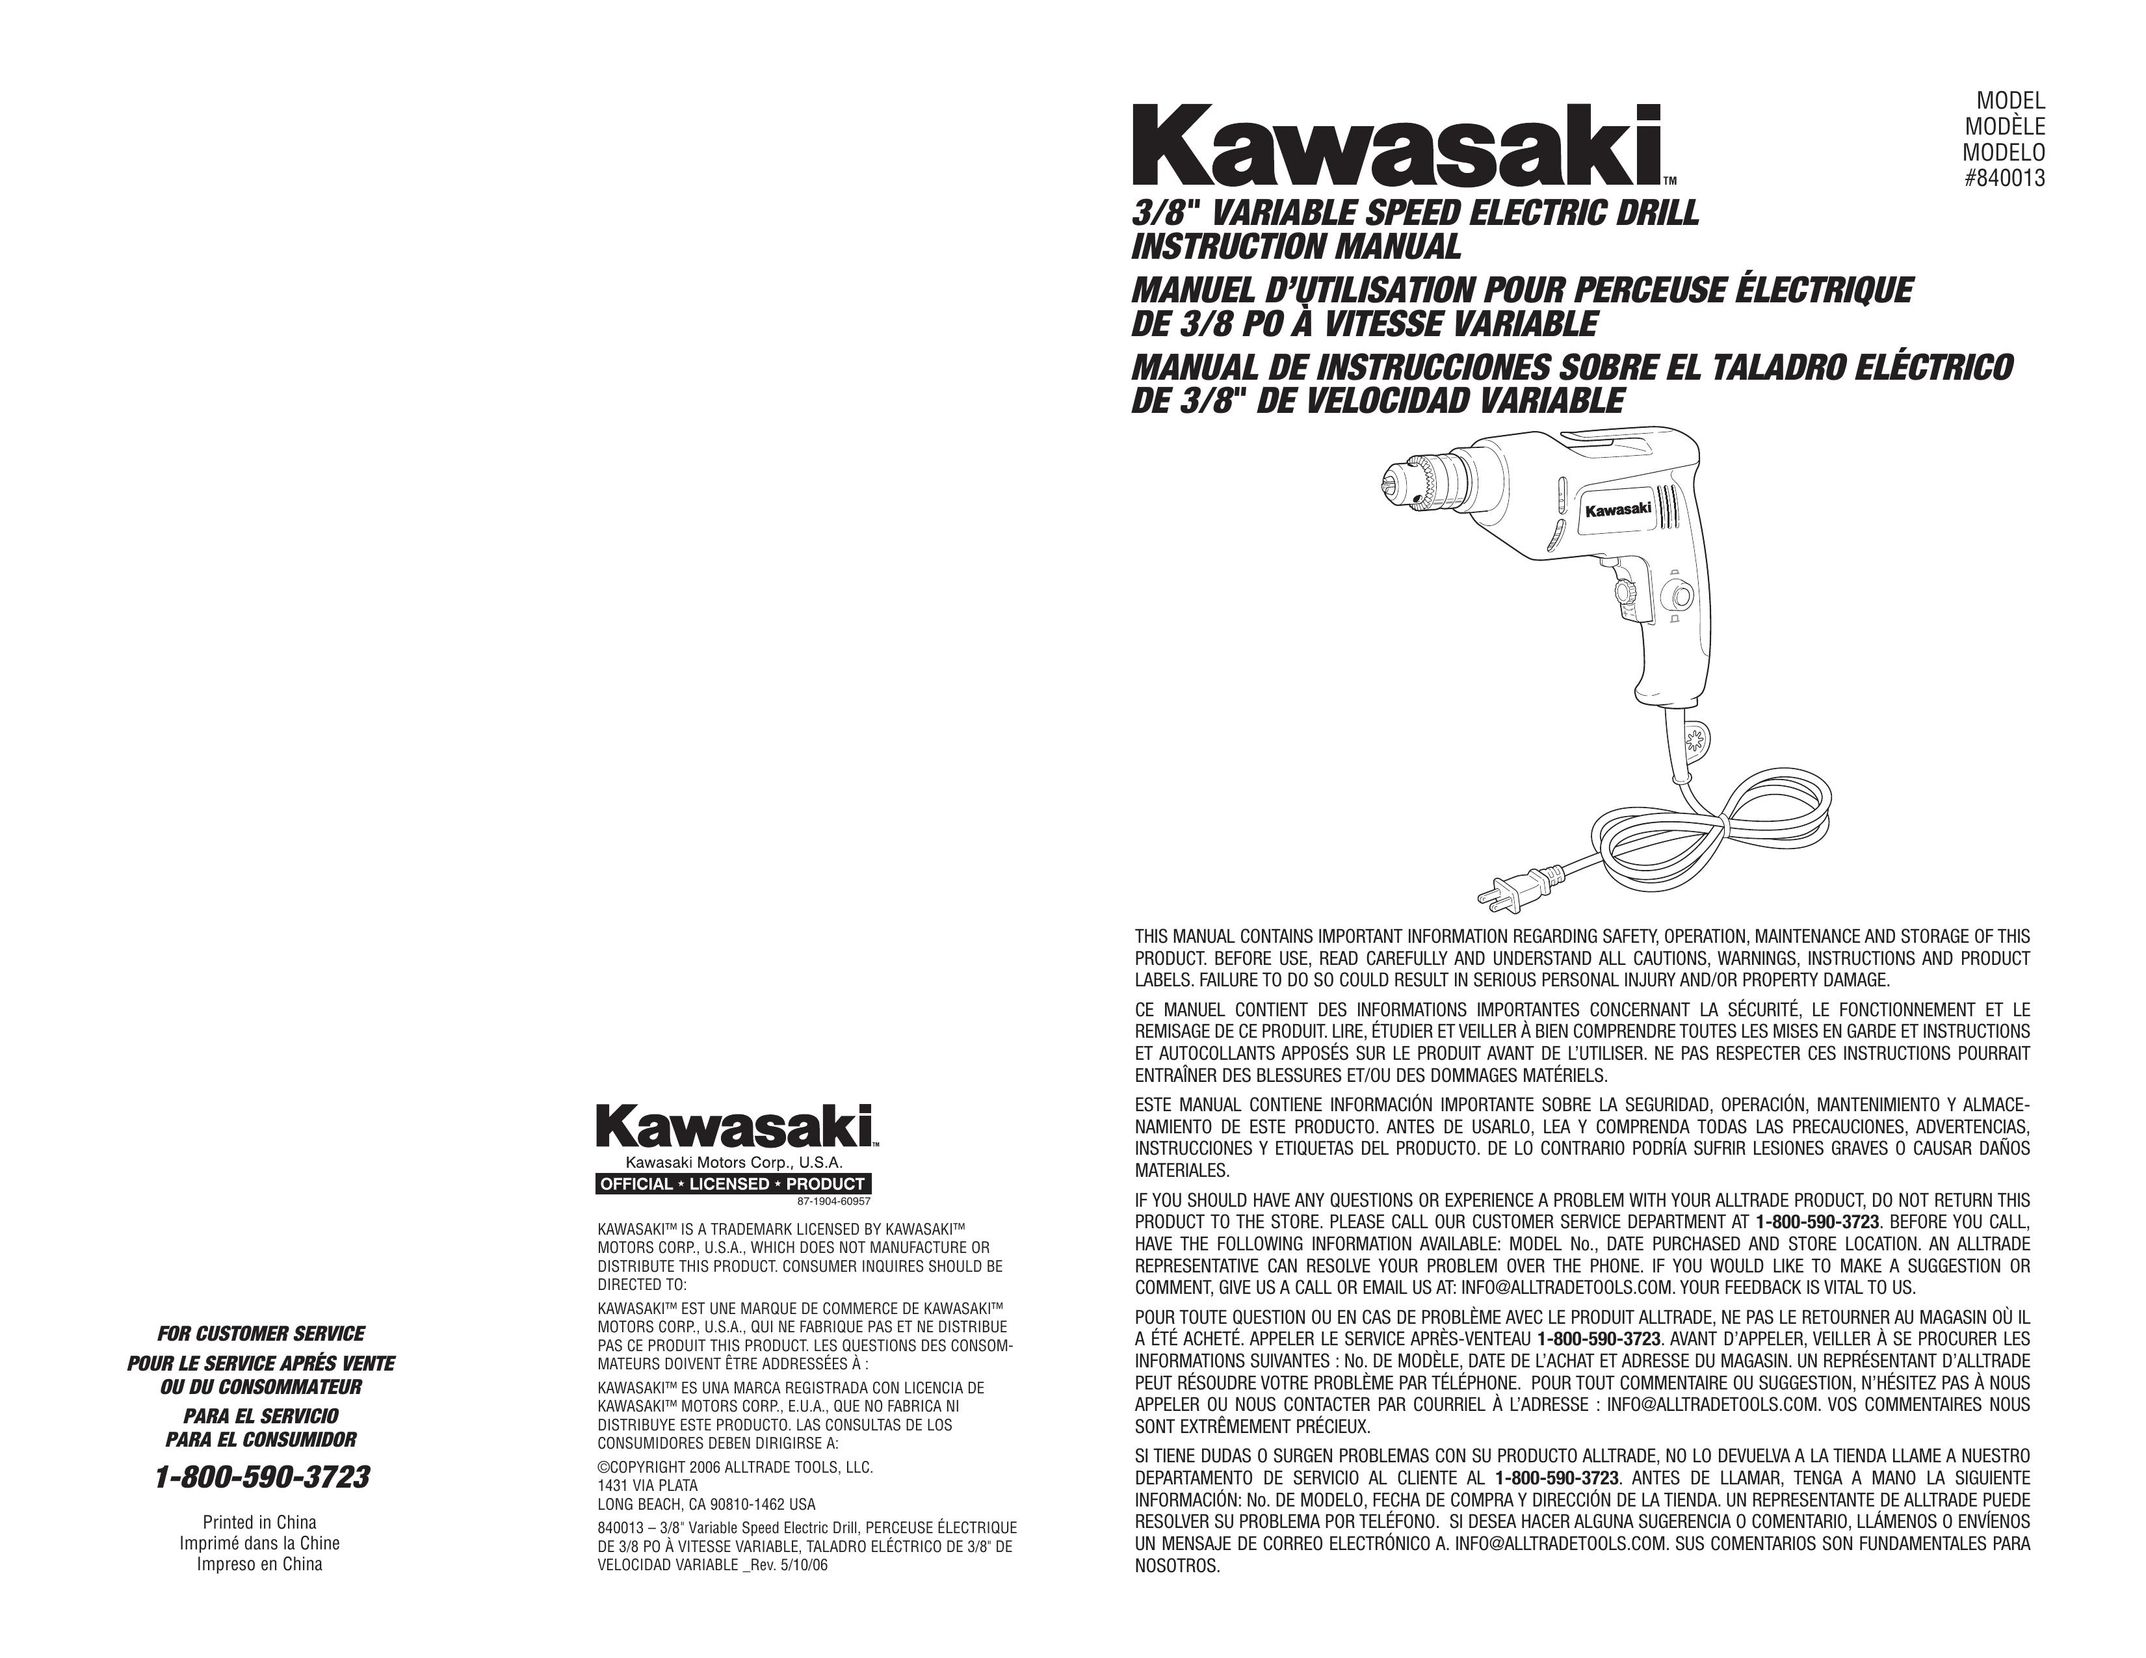 Kawasaki 840013 Drill User Manual